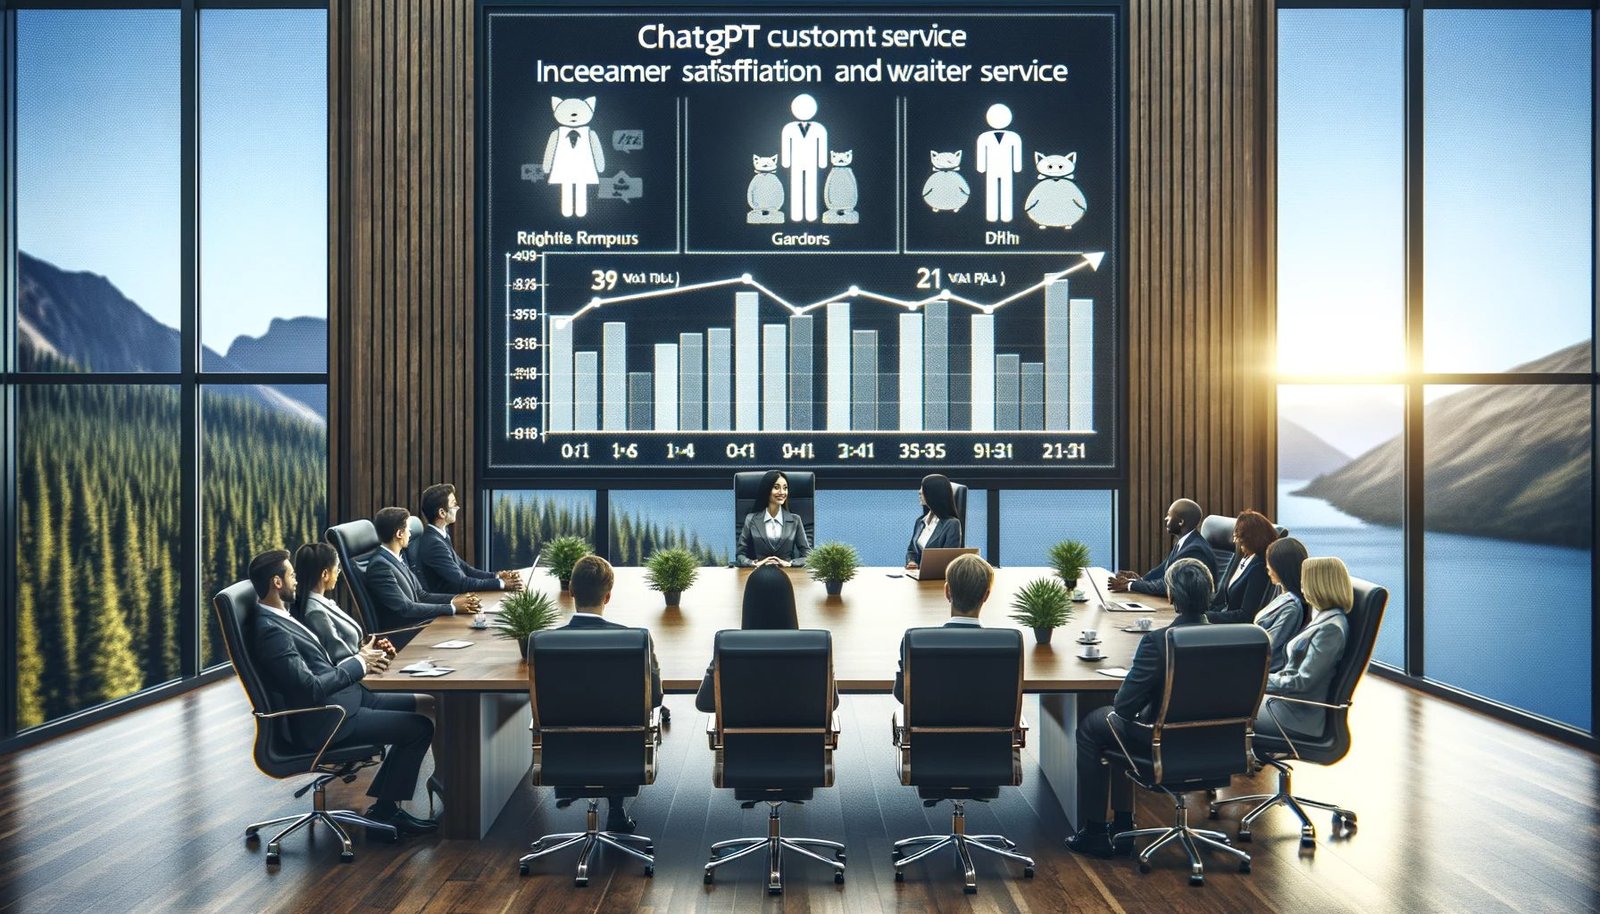 ChatGPT Customer Service Benefits for Businesse